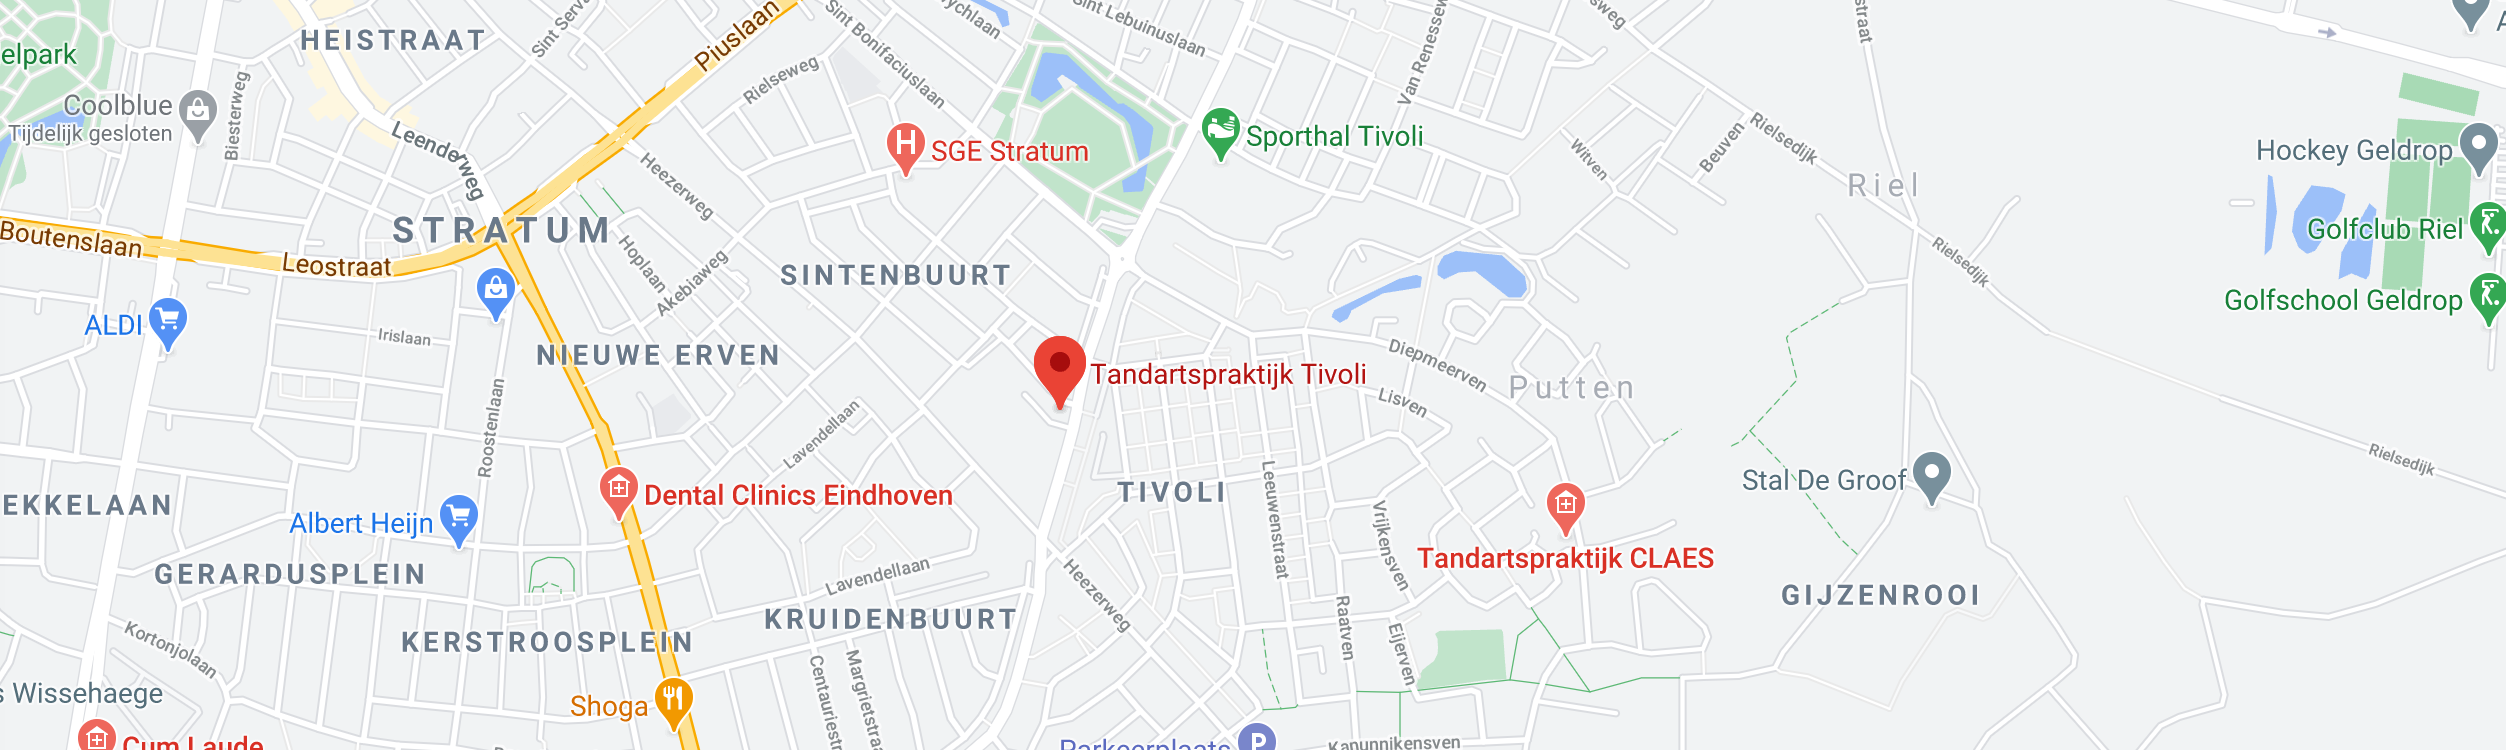 Contact tandarts Tivoli Eindhoven